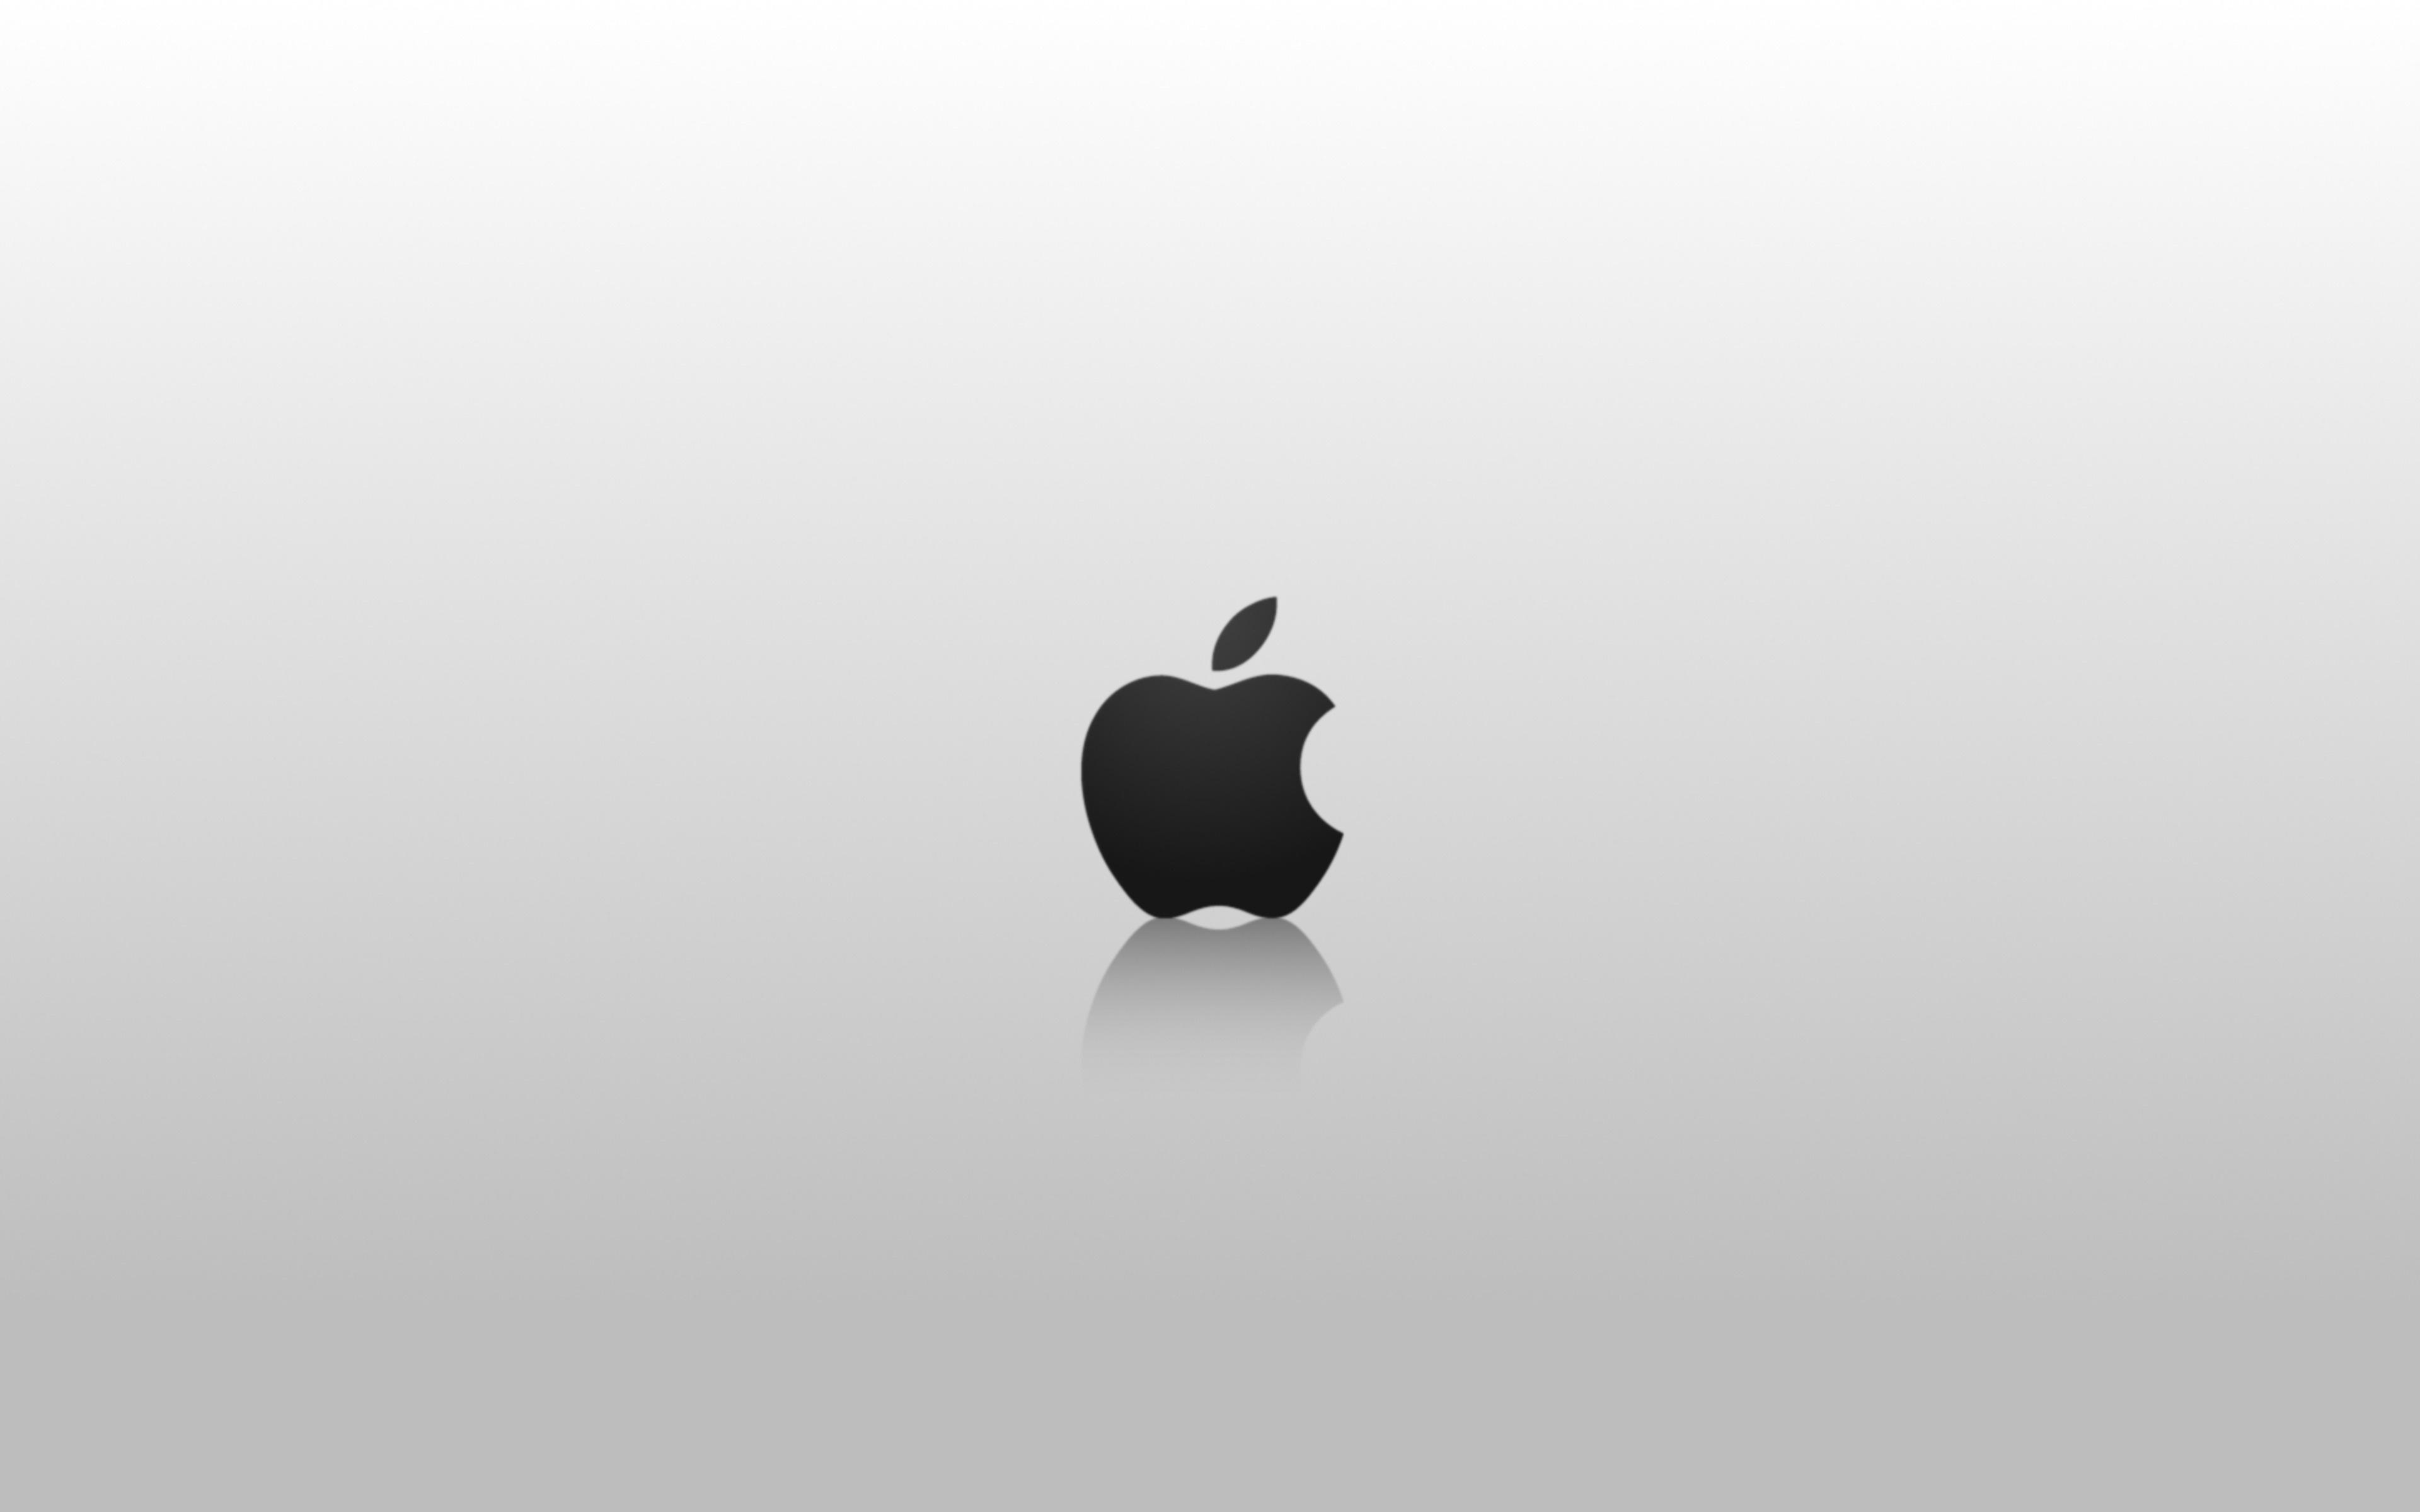 3840x2400 Apple Simple Logo 4k HD 4k Wallpapers, Images ...